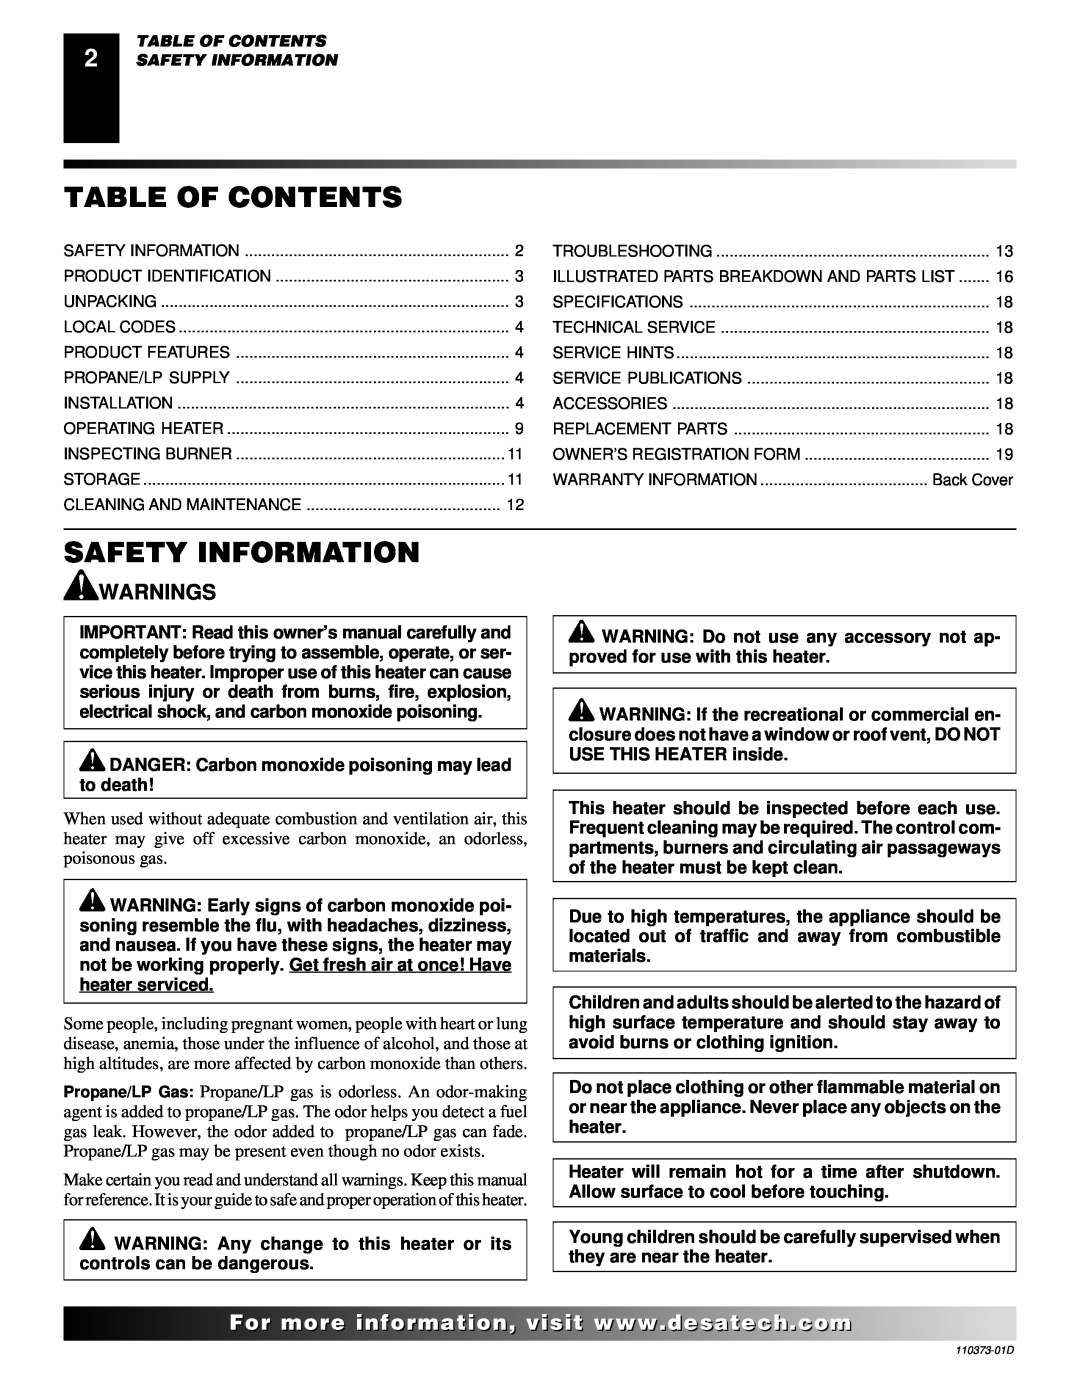 Desa REM10PT RH10PT installation manual Table Of Contents, Safety Information, Warnings, For..com 